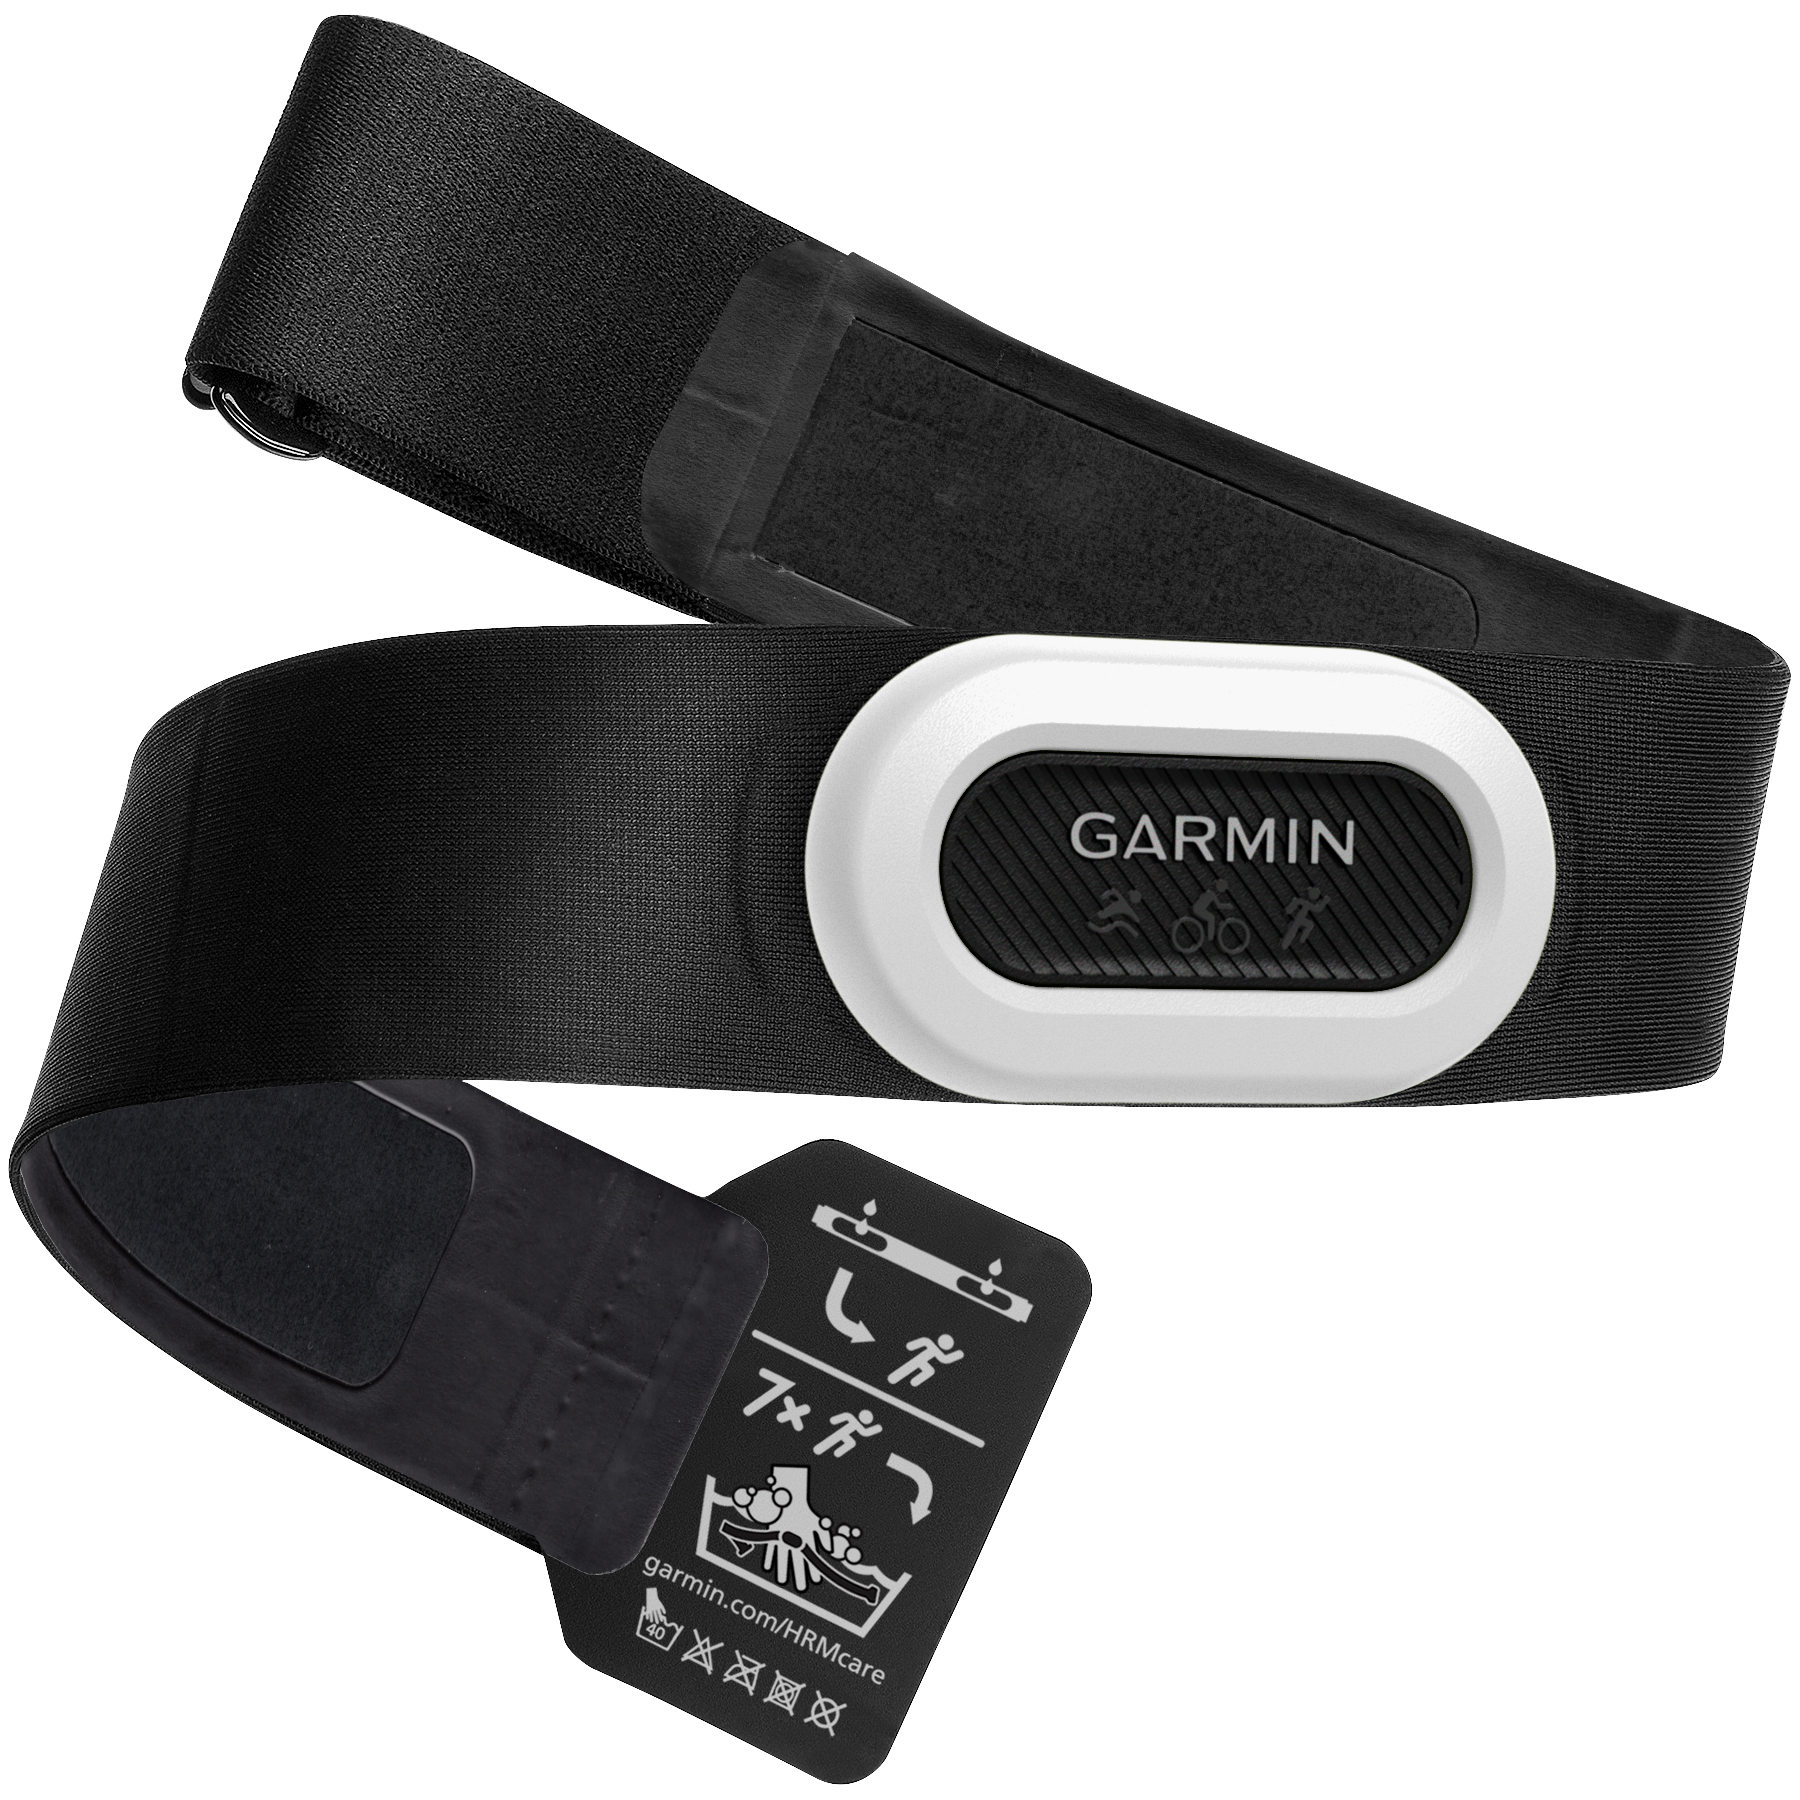 Productfoto van Garmin HRM Pro Plus Heart Rate Monitor + Chest Belt